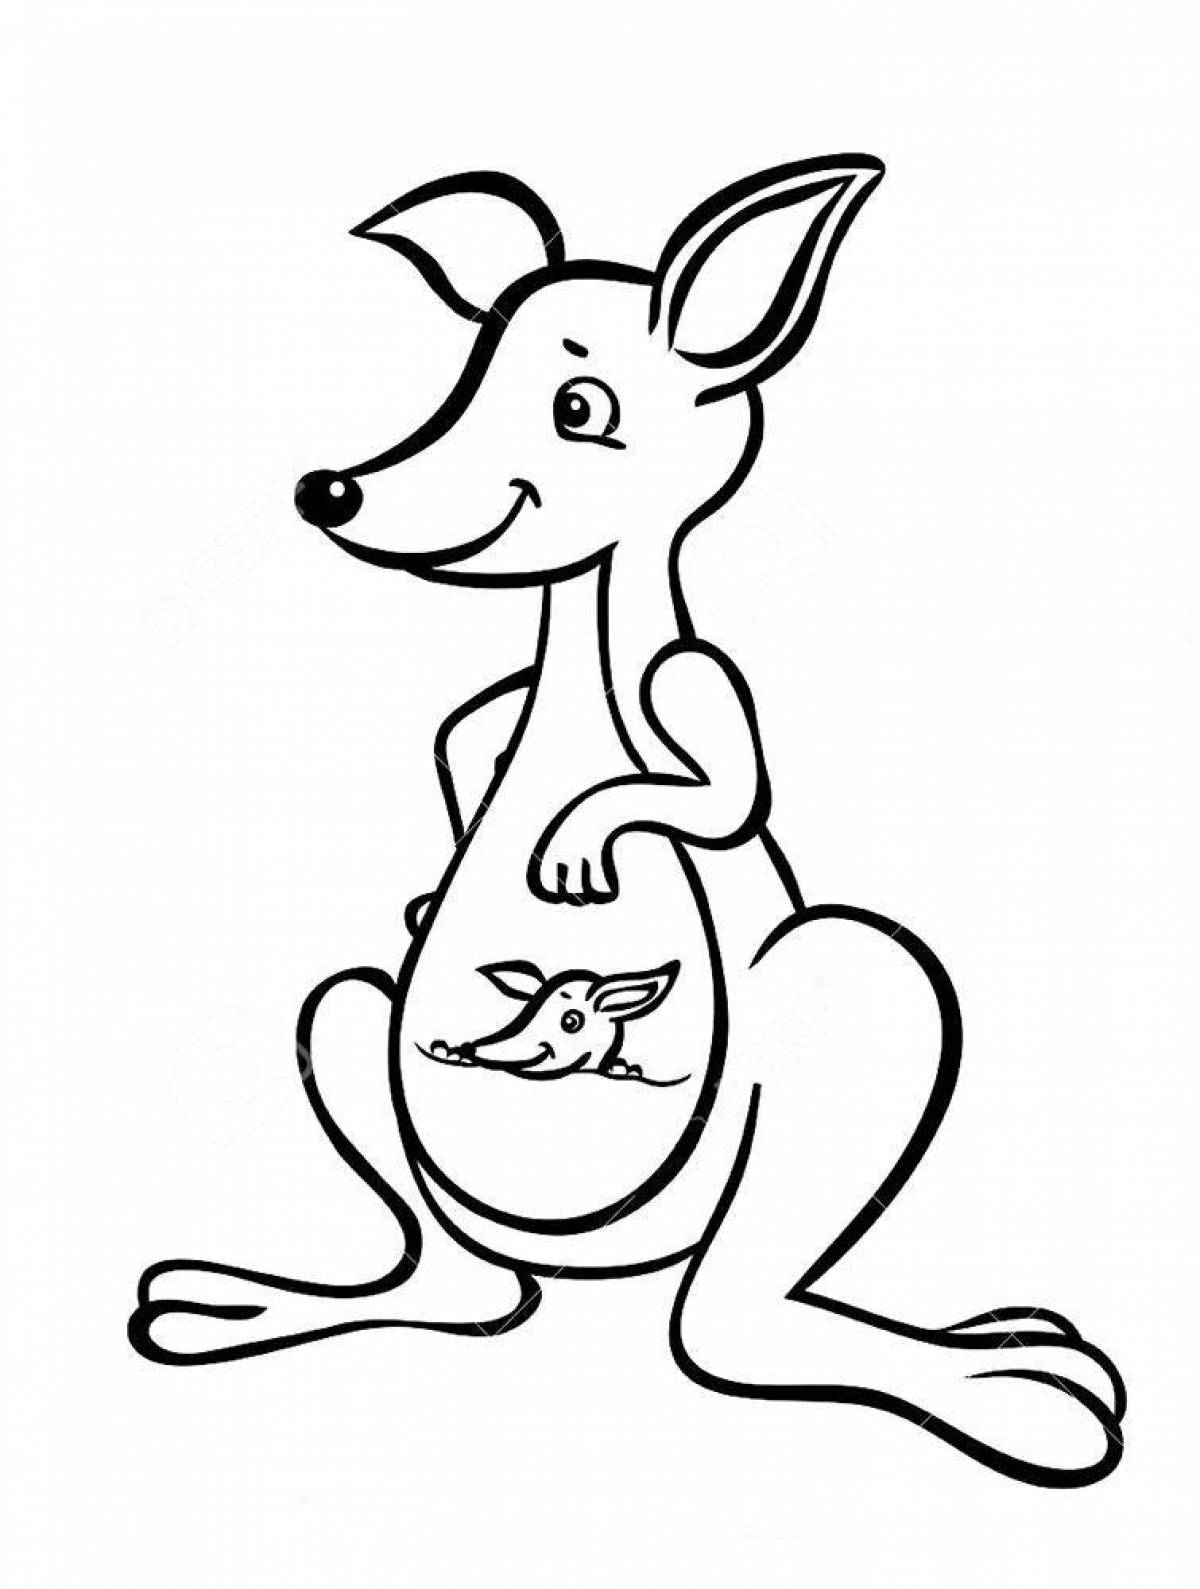 Shiny kangaroo coloring book for kids